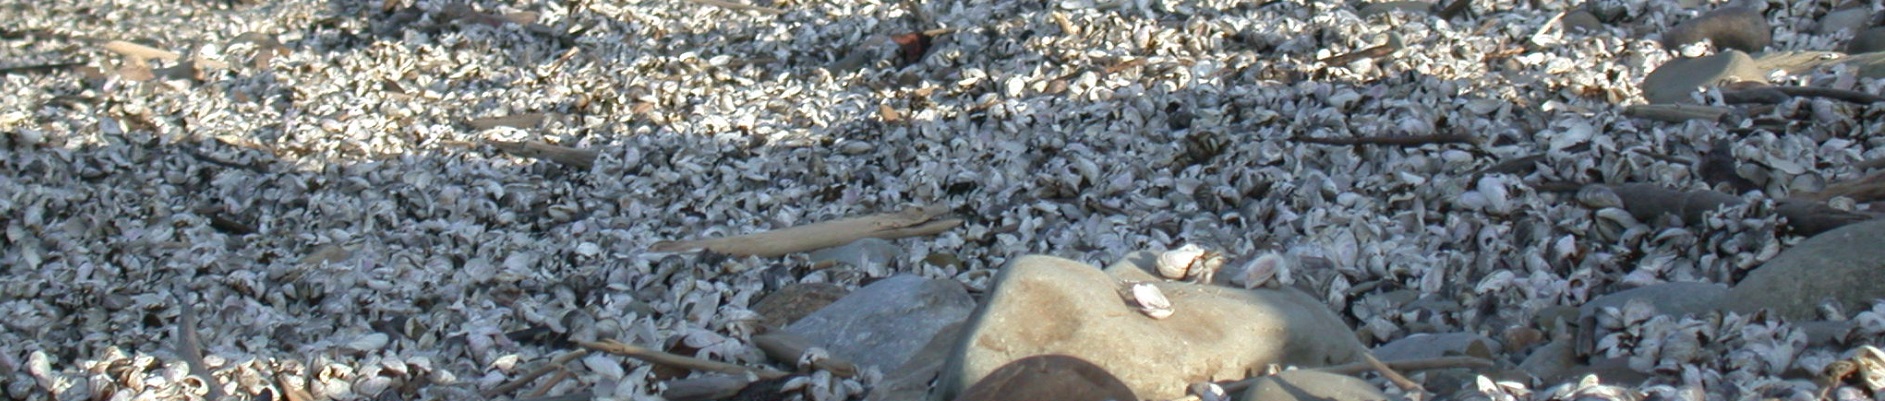 photo of invasive species on a beach